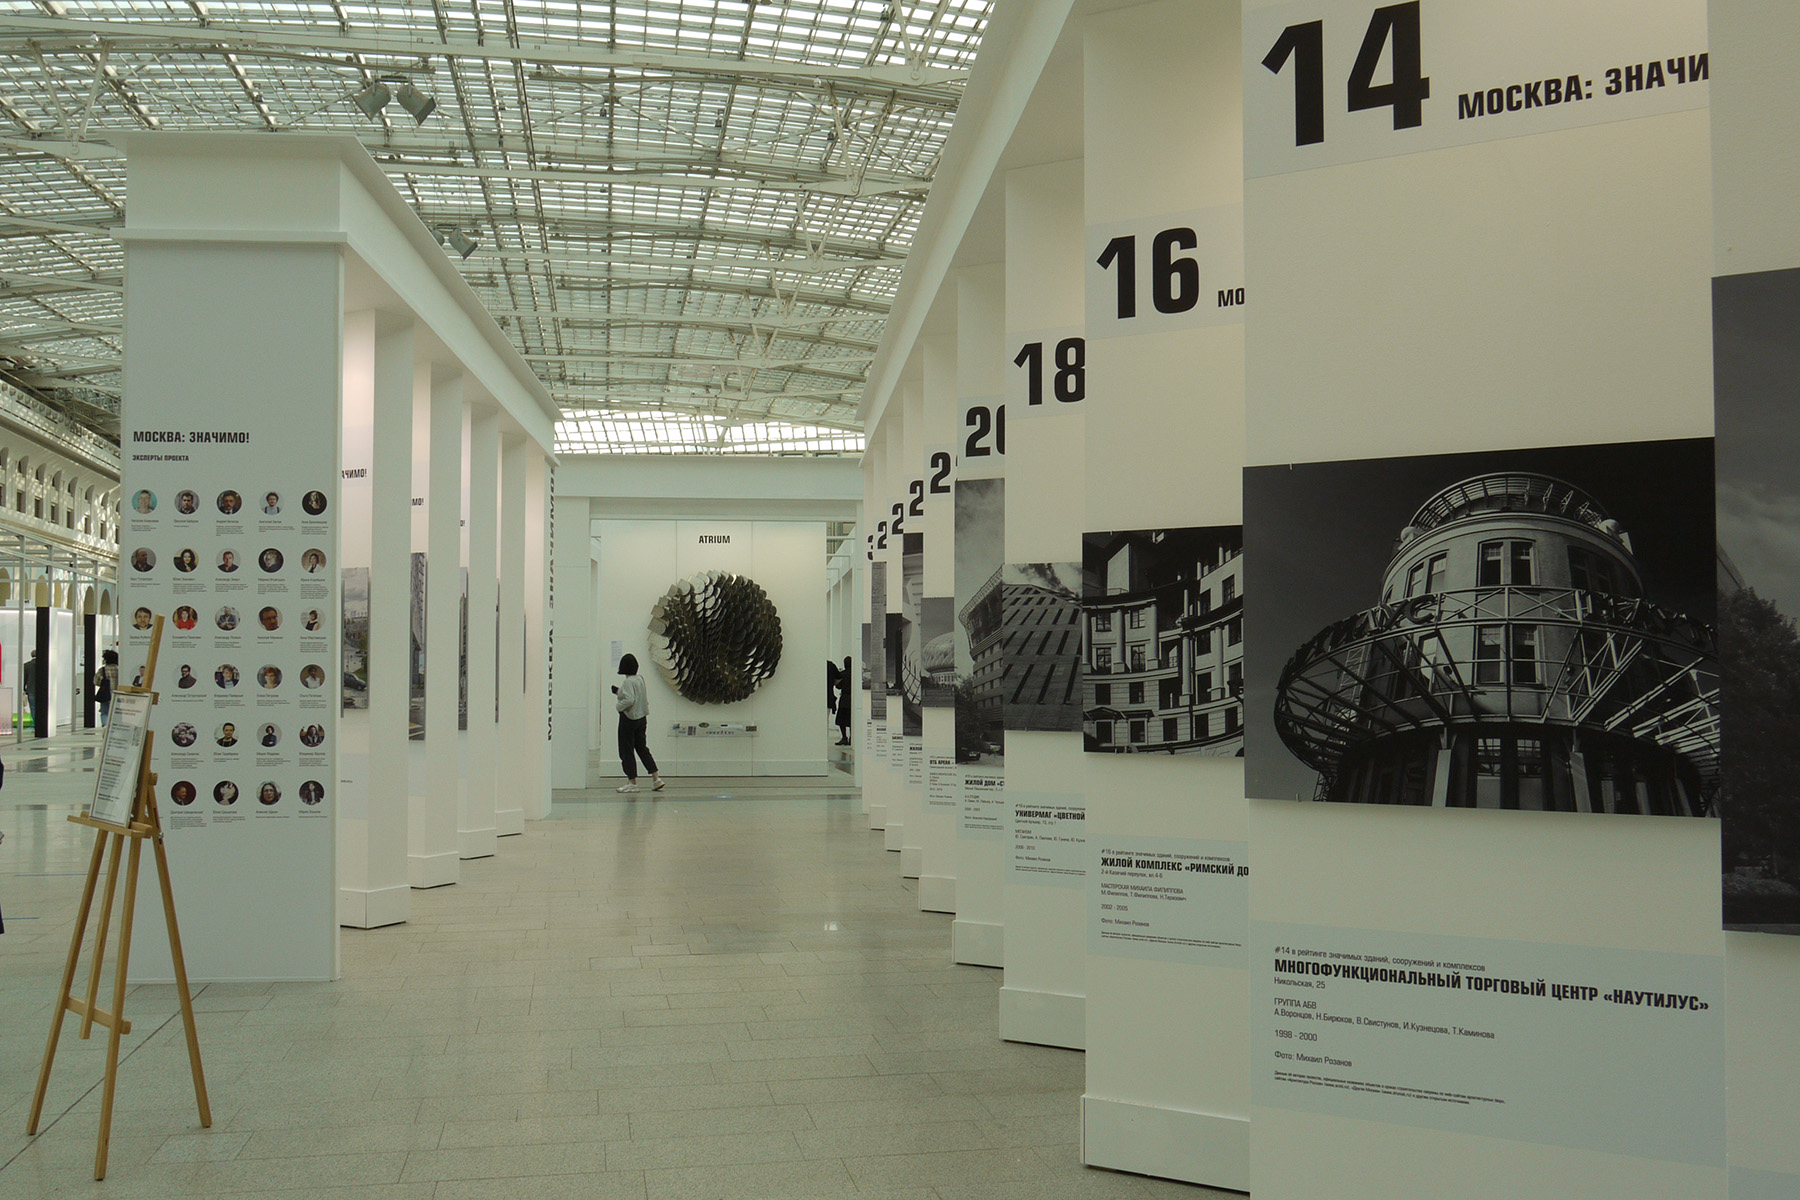 Выставка АРХ Москва 2020